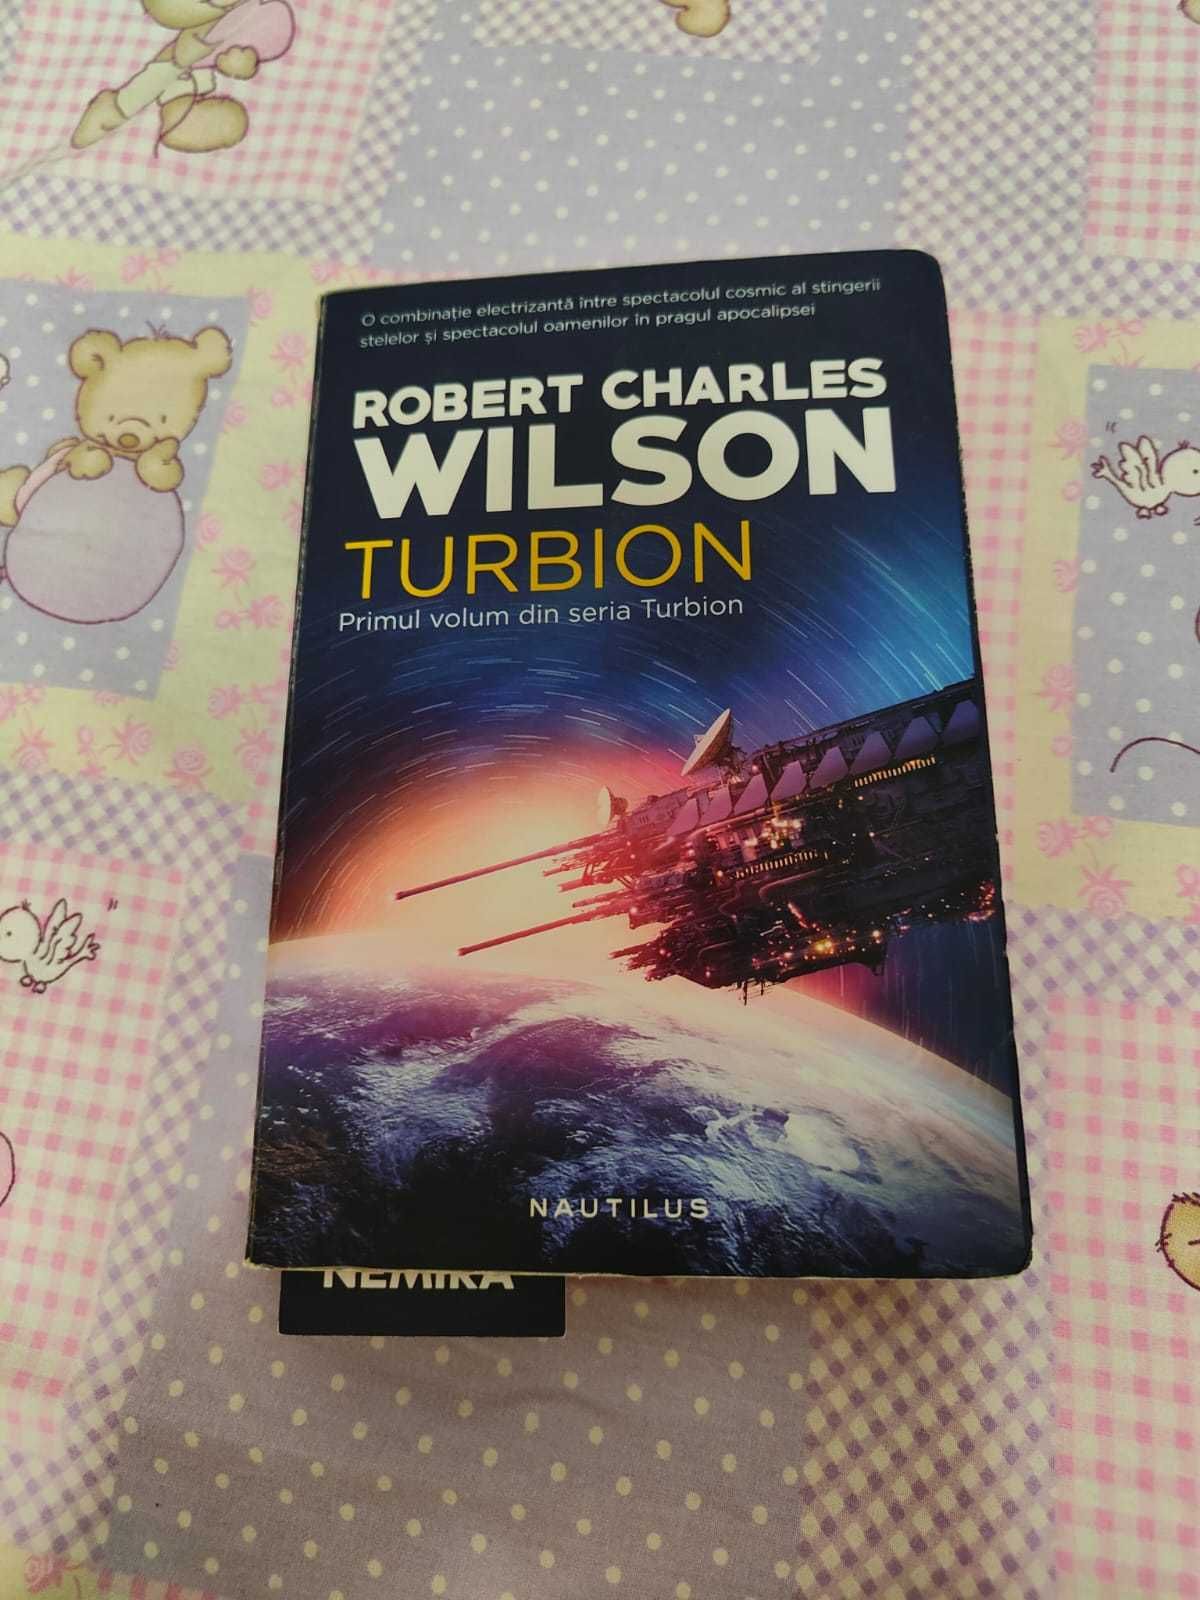 Trilogia Turbion, de Robert Charles Wilson